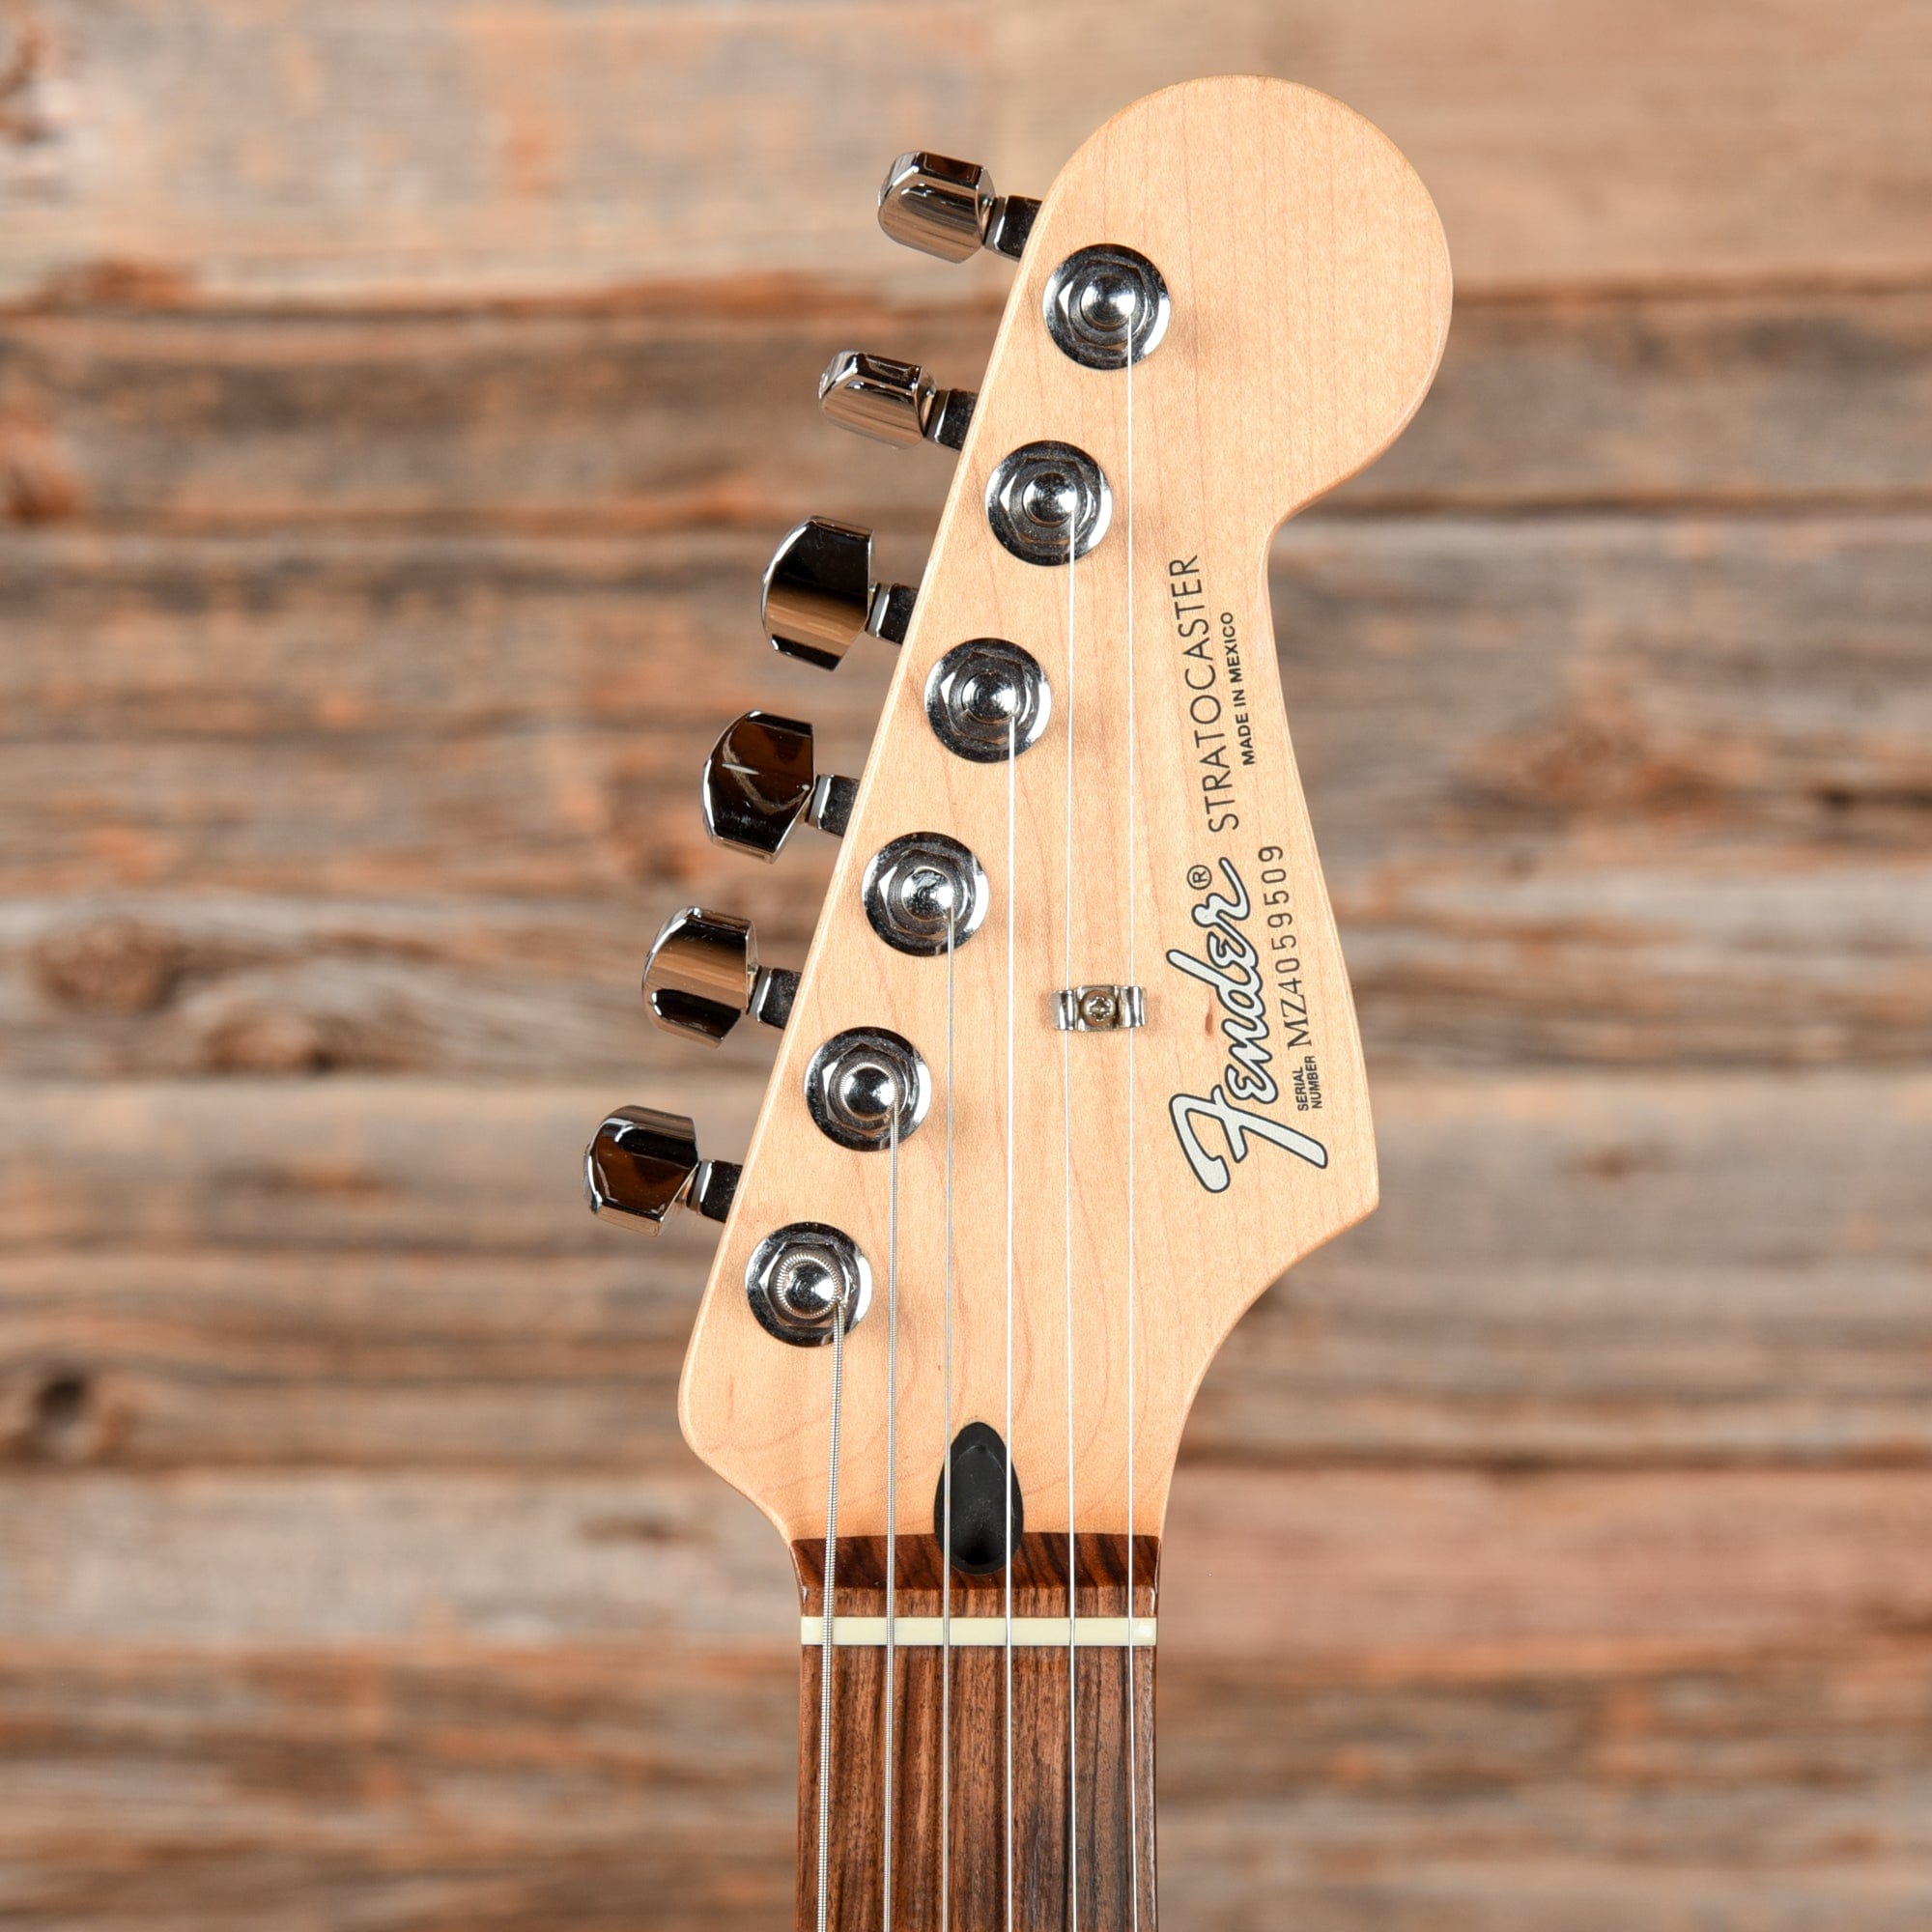 Fender Standard Stratocaster Black 2004 Electric Guitars / Solid Body